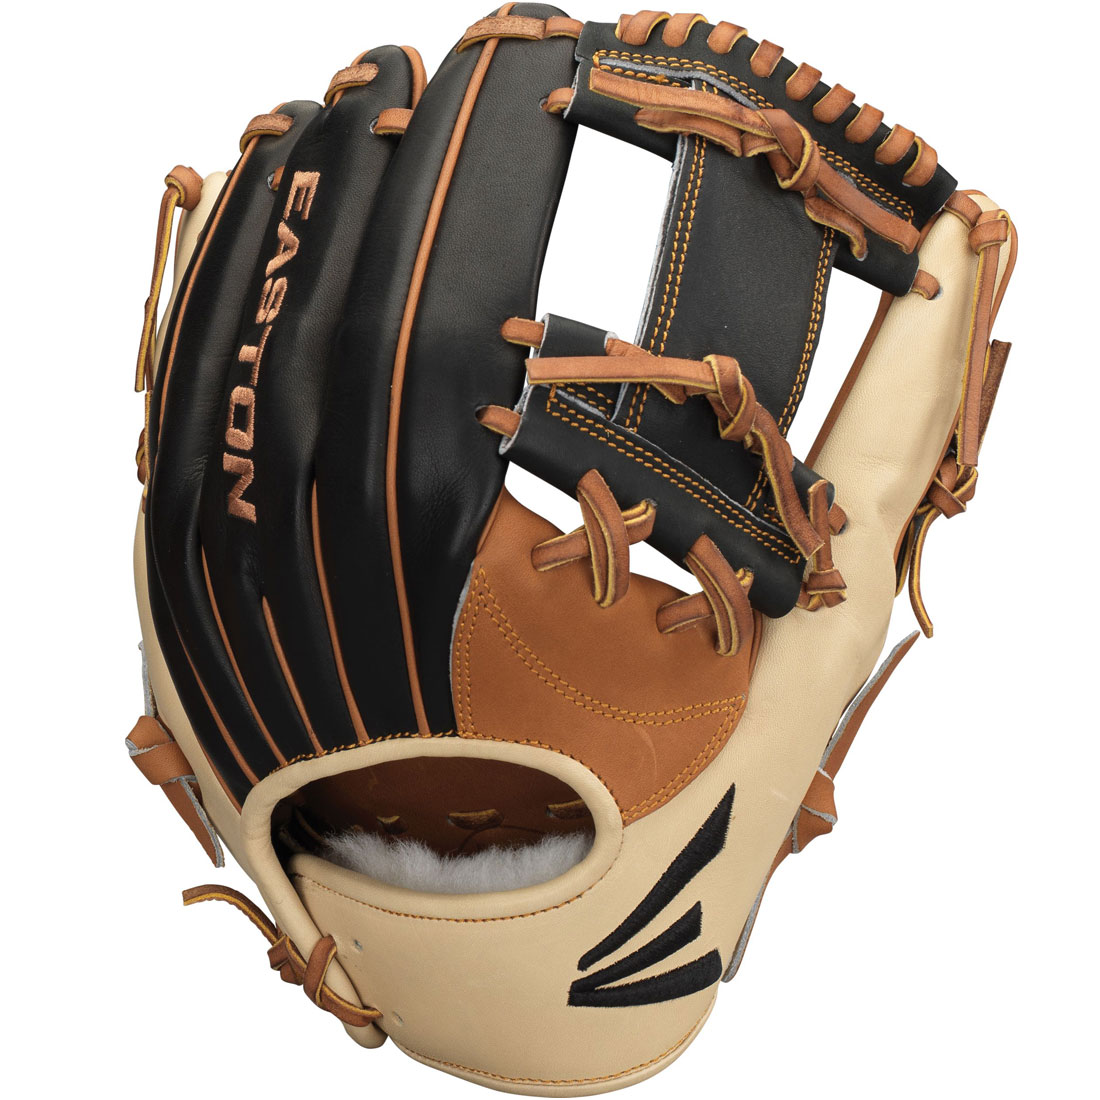 Easton Pro Collection Baseball Glove 11.5\" PCHC21